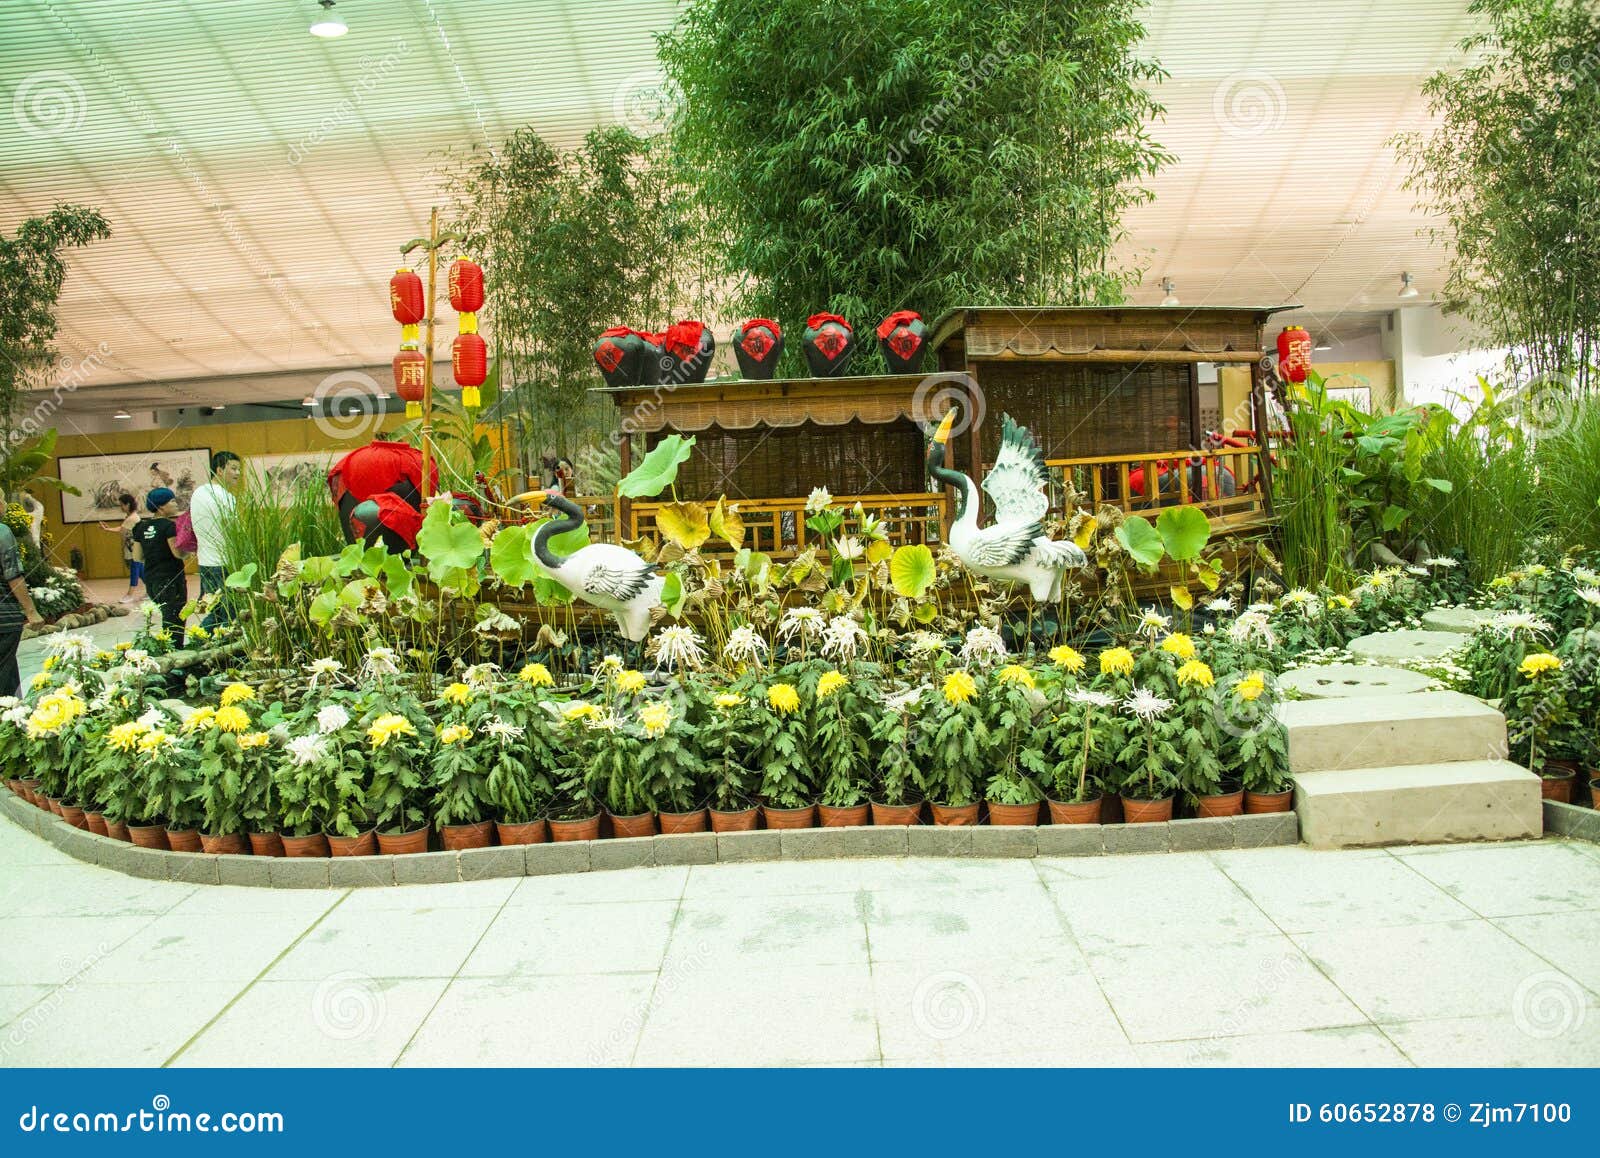 Asia China  Beijing Shunyi Flowers Port indoor Exhibition  